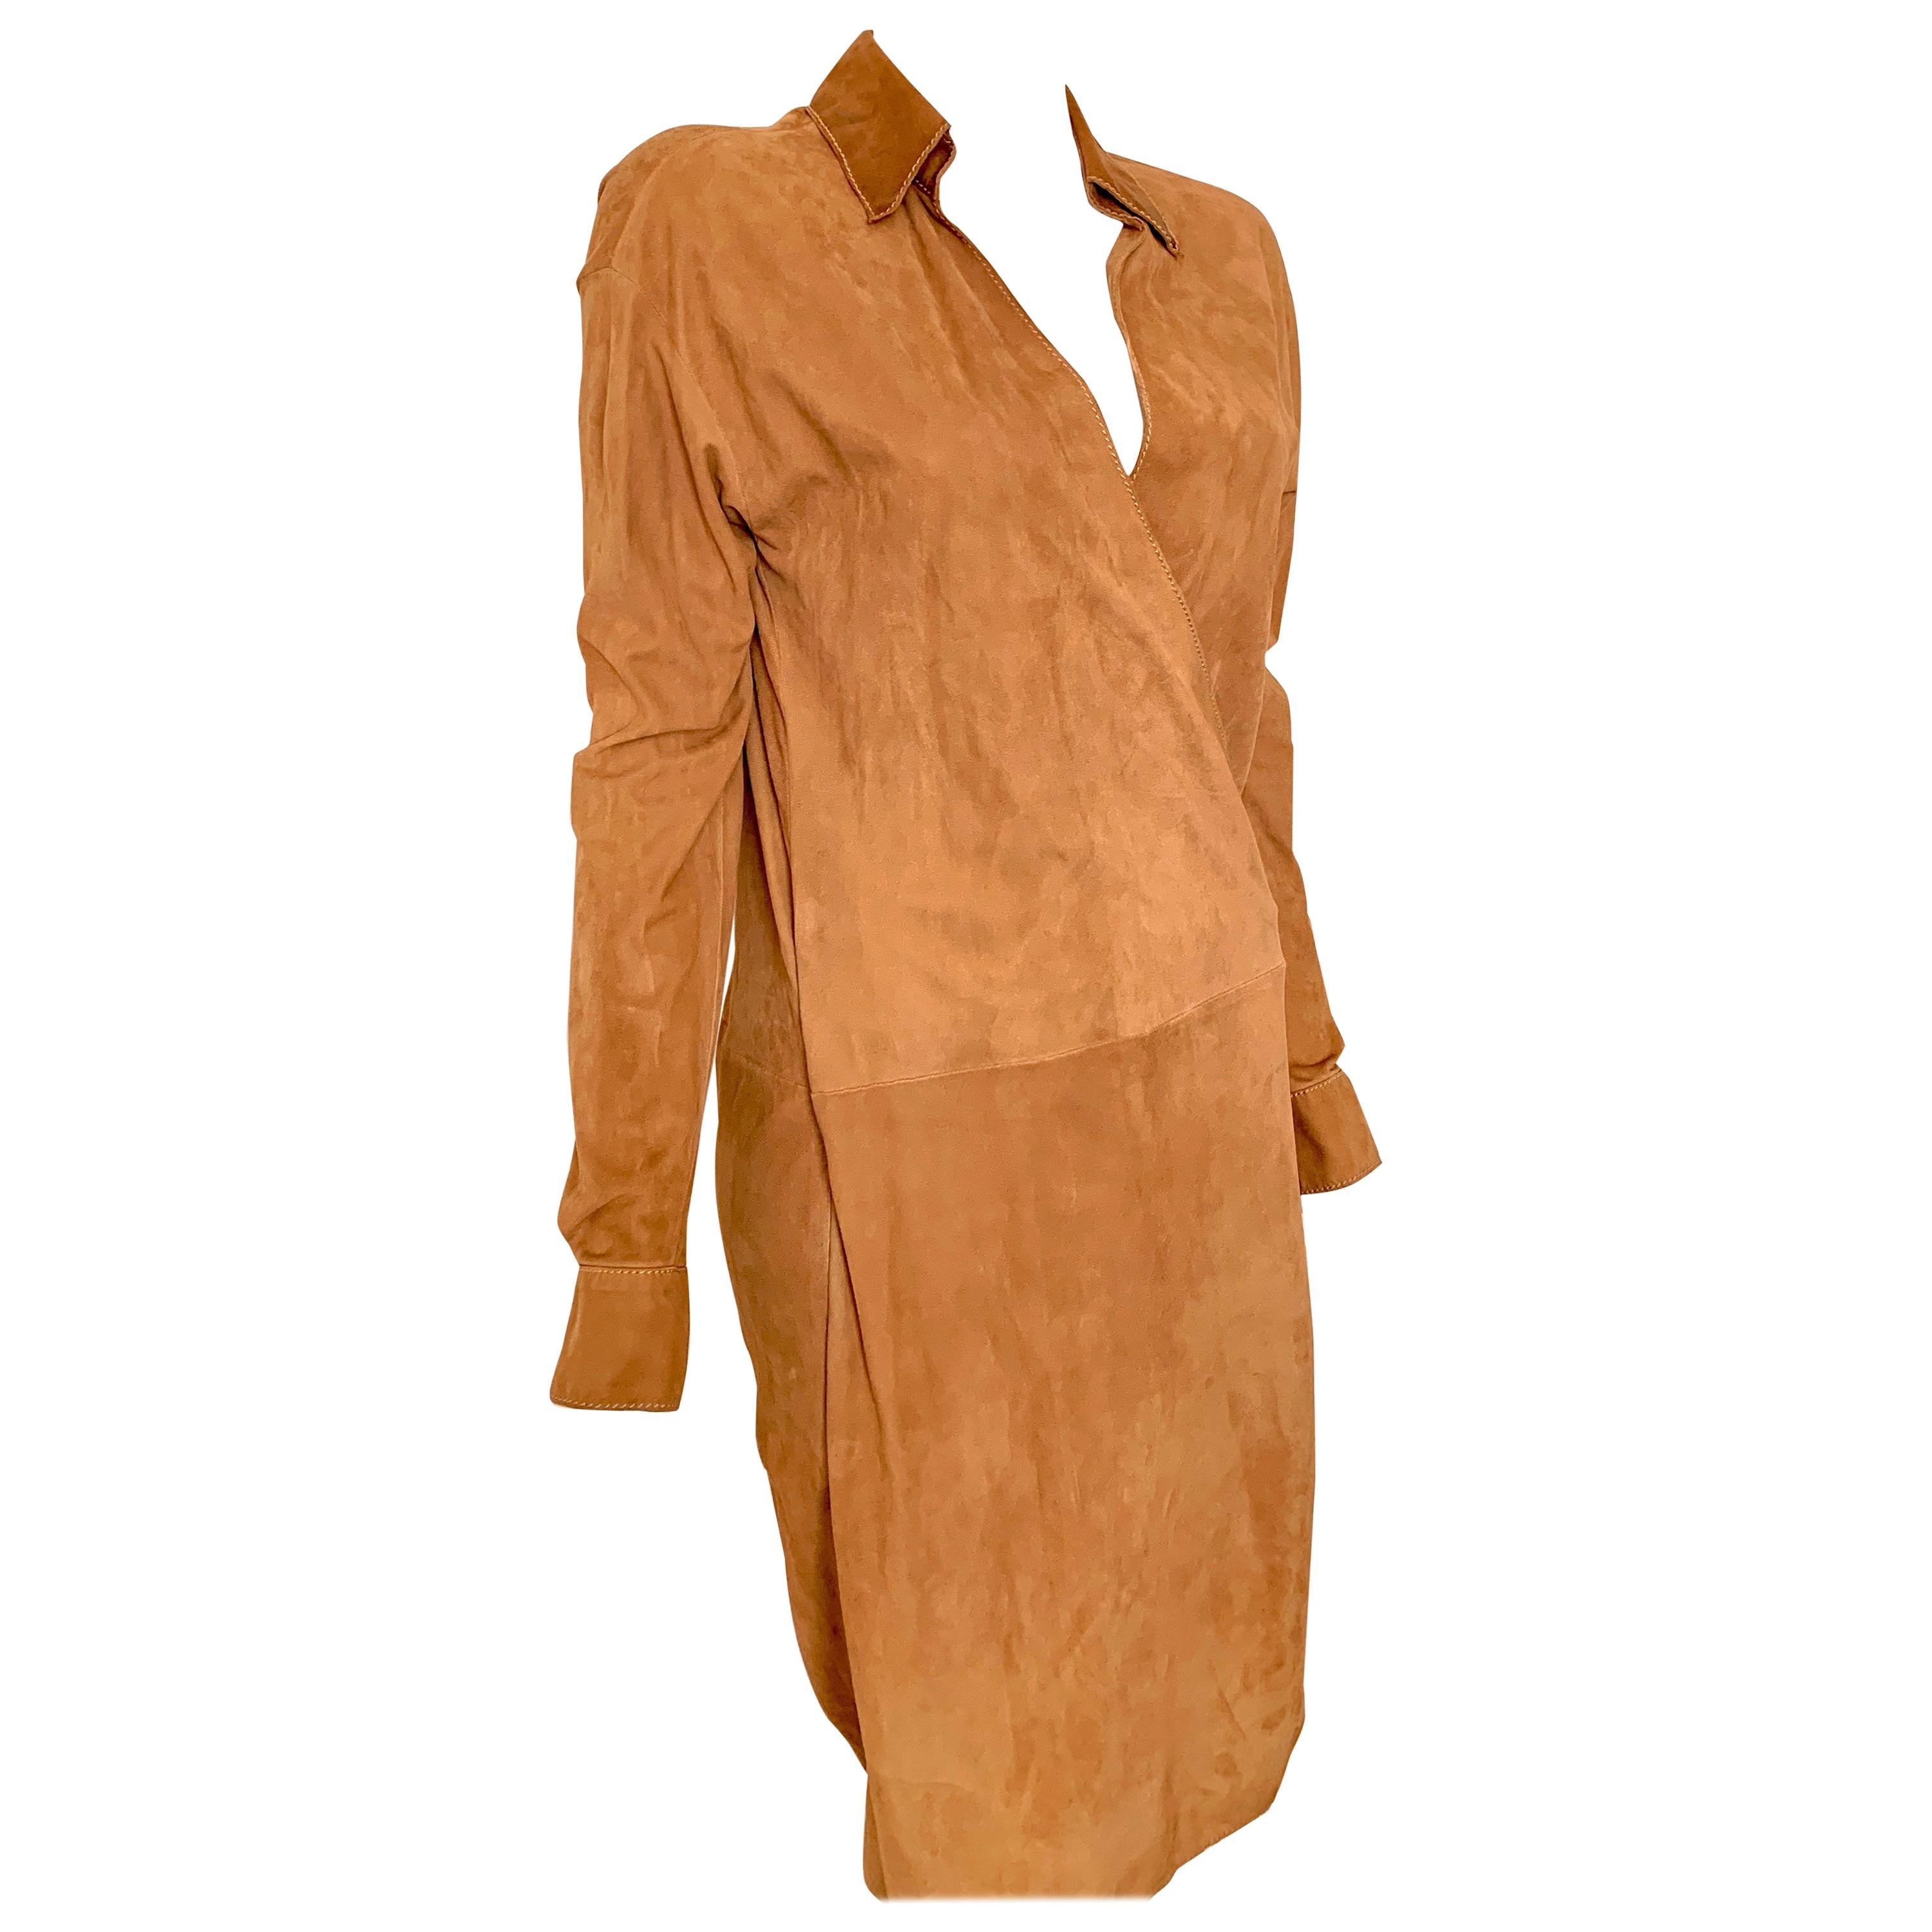 Ralph Lauren - Robe portefeuille en daim brun clair, taille 6